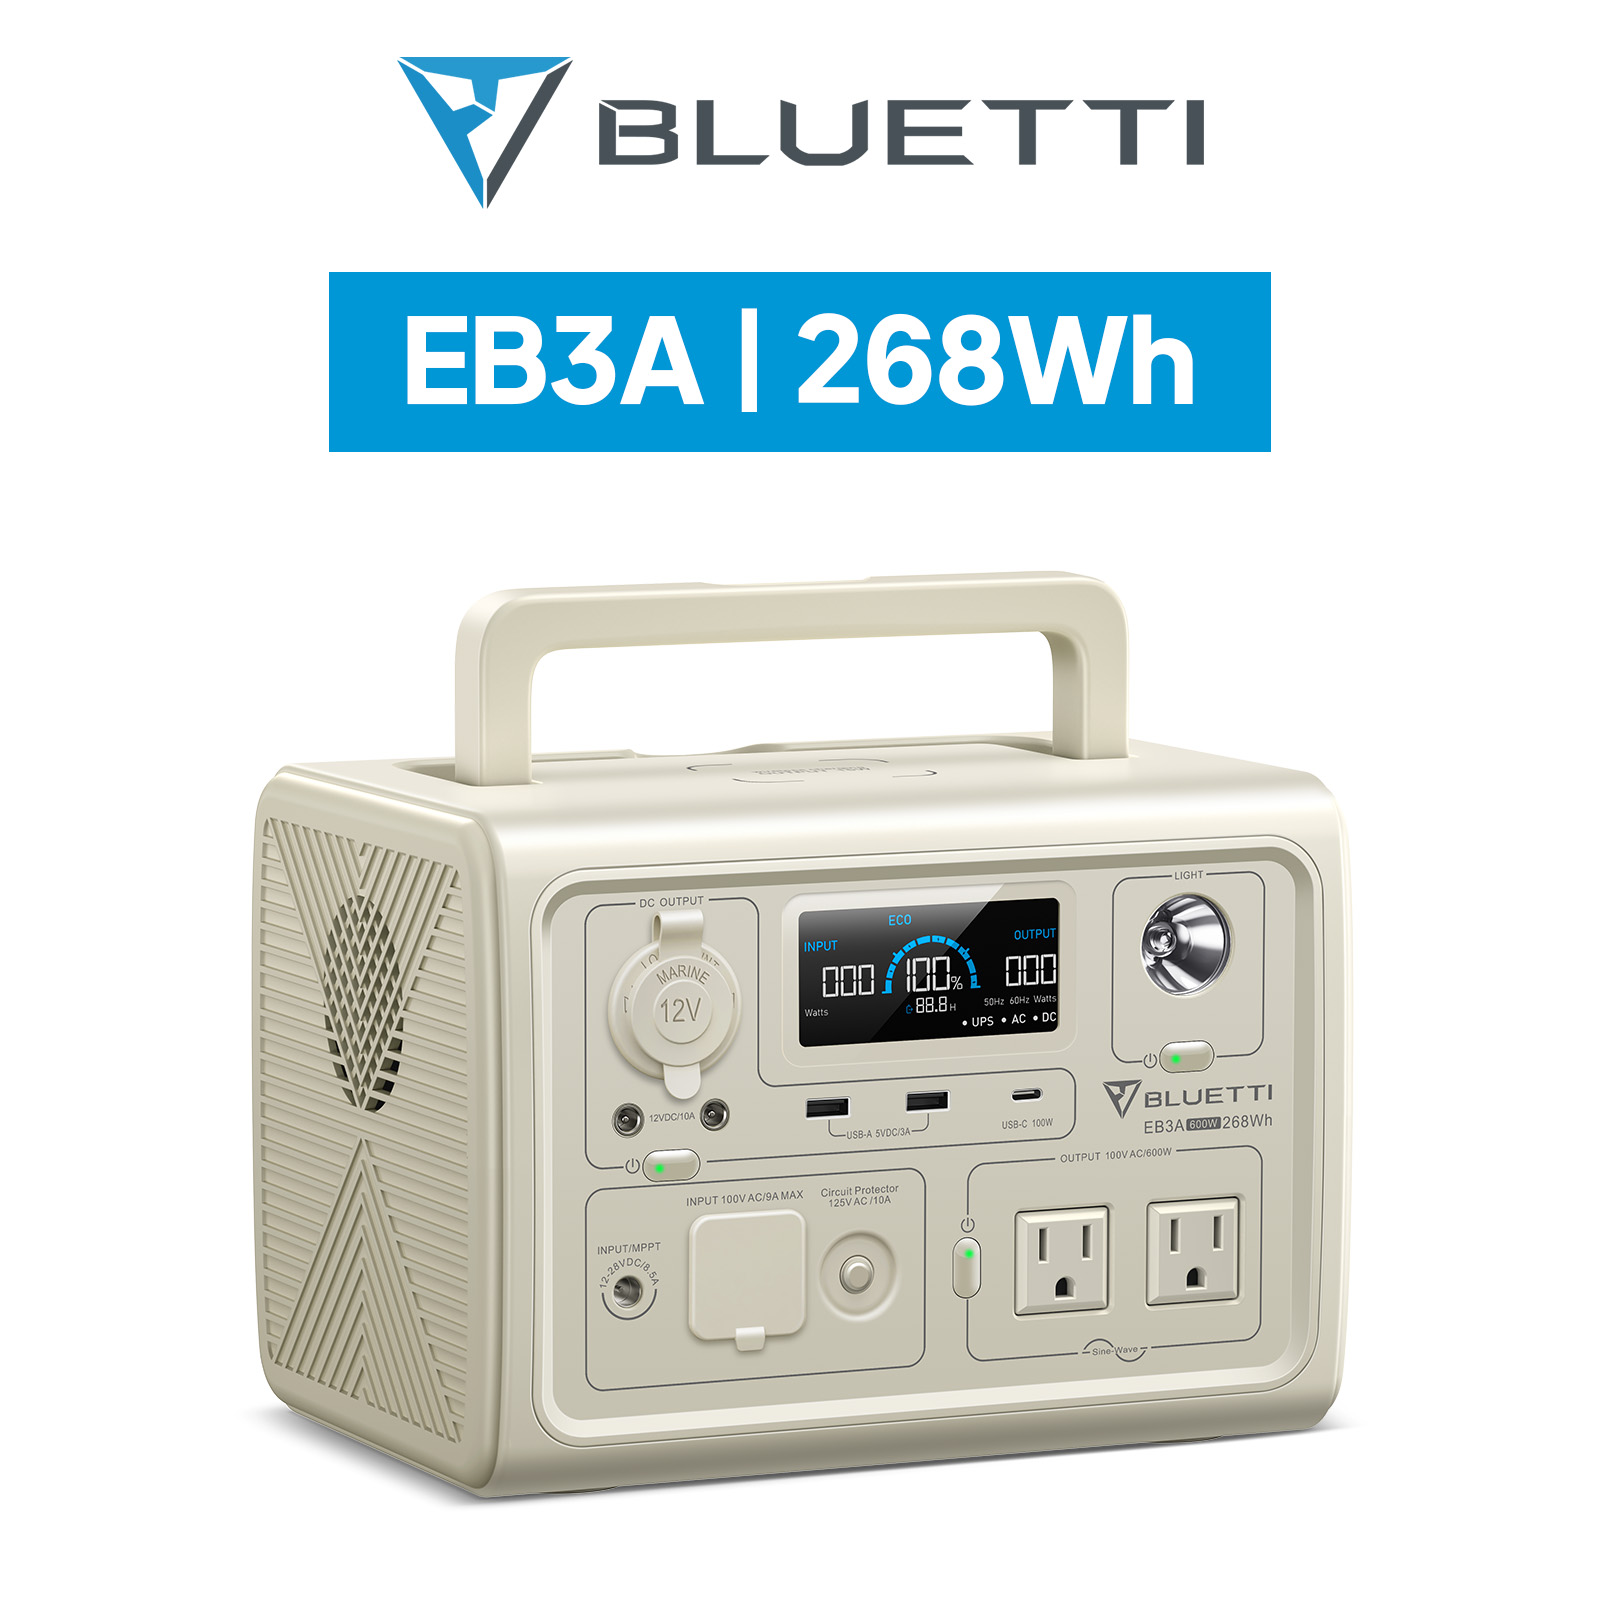 BLUETTI ポータブル電源 EB3A ベージュ 268Wh/600W 軽量 小型 蓄電池 